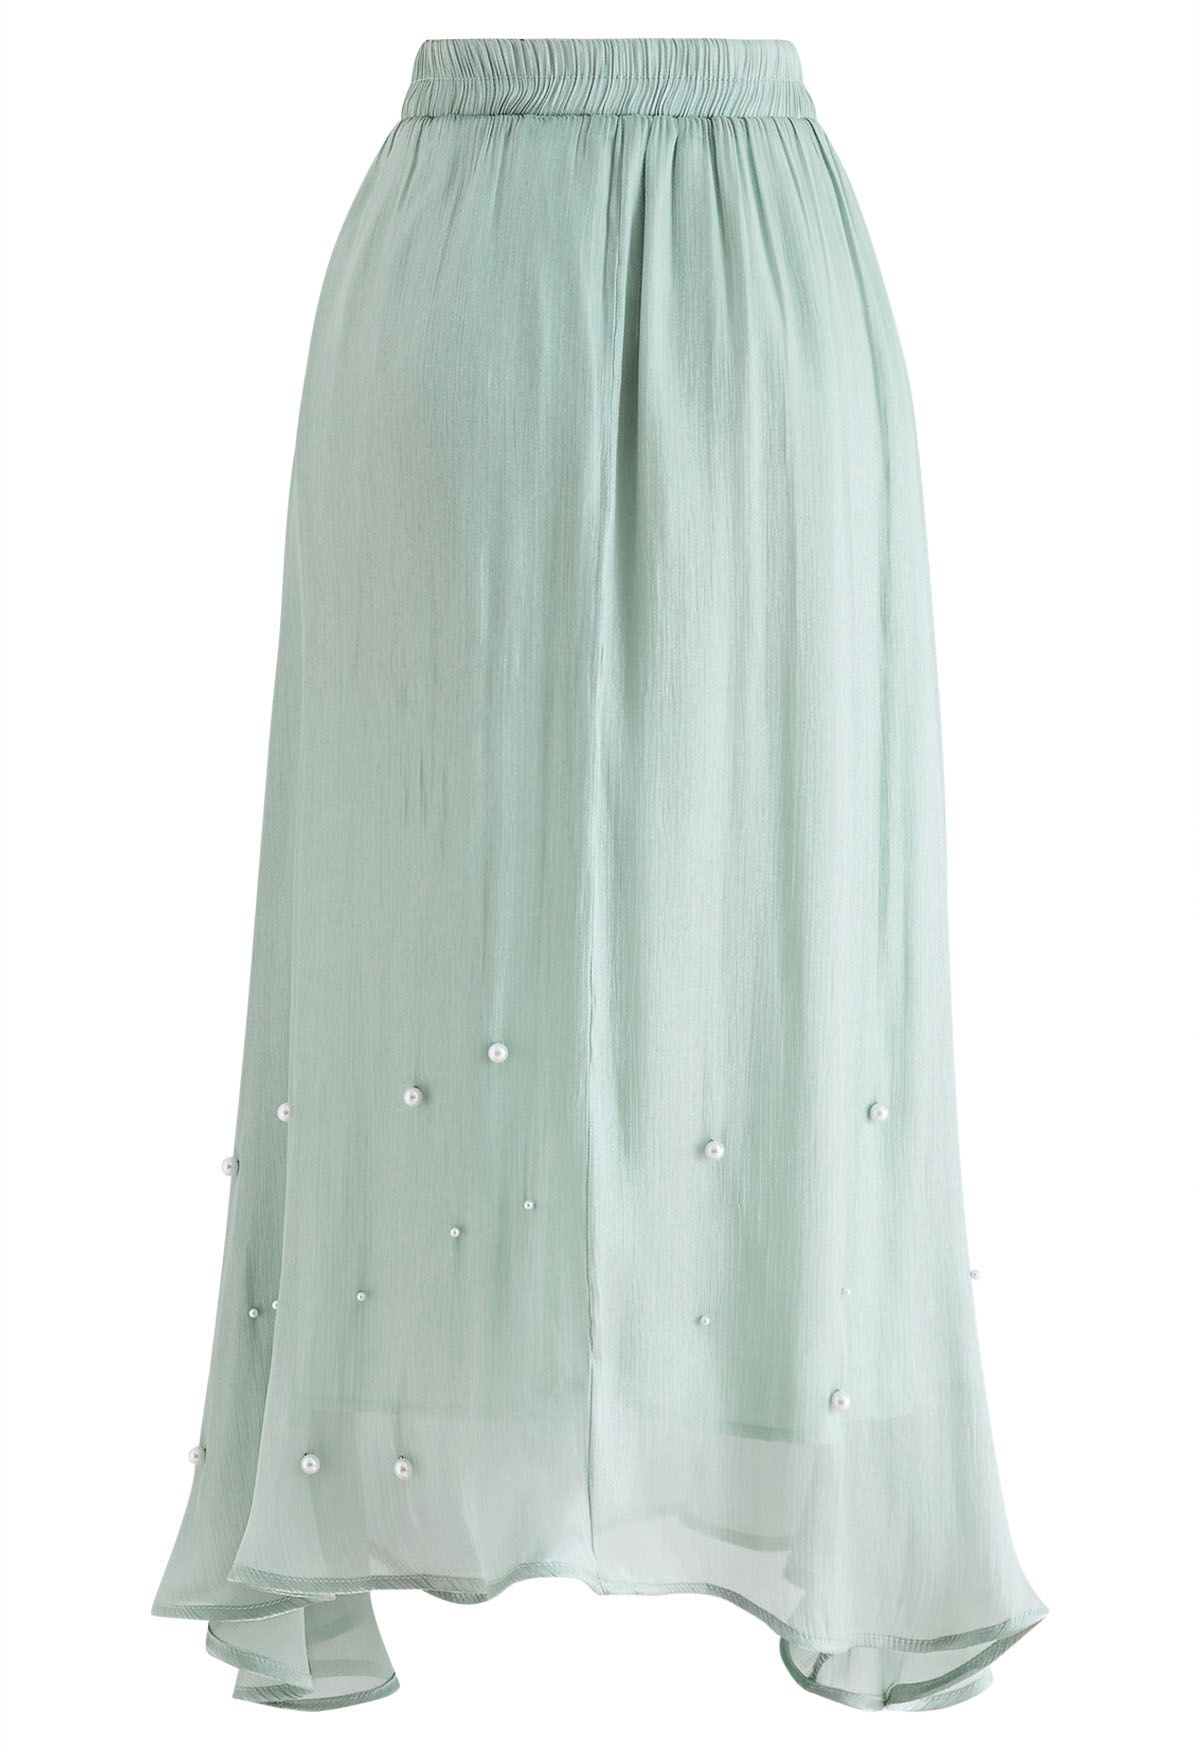 Irregular Pearl Shimmer Chiffon Skirt in Mint